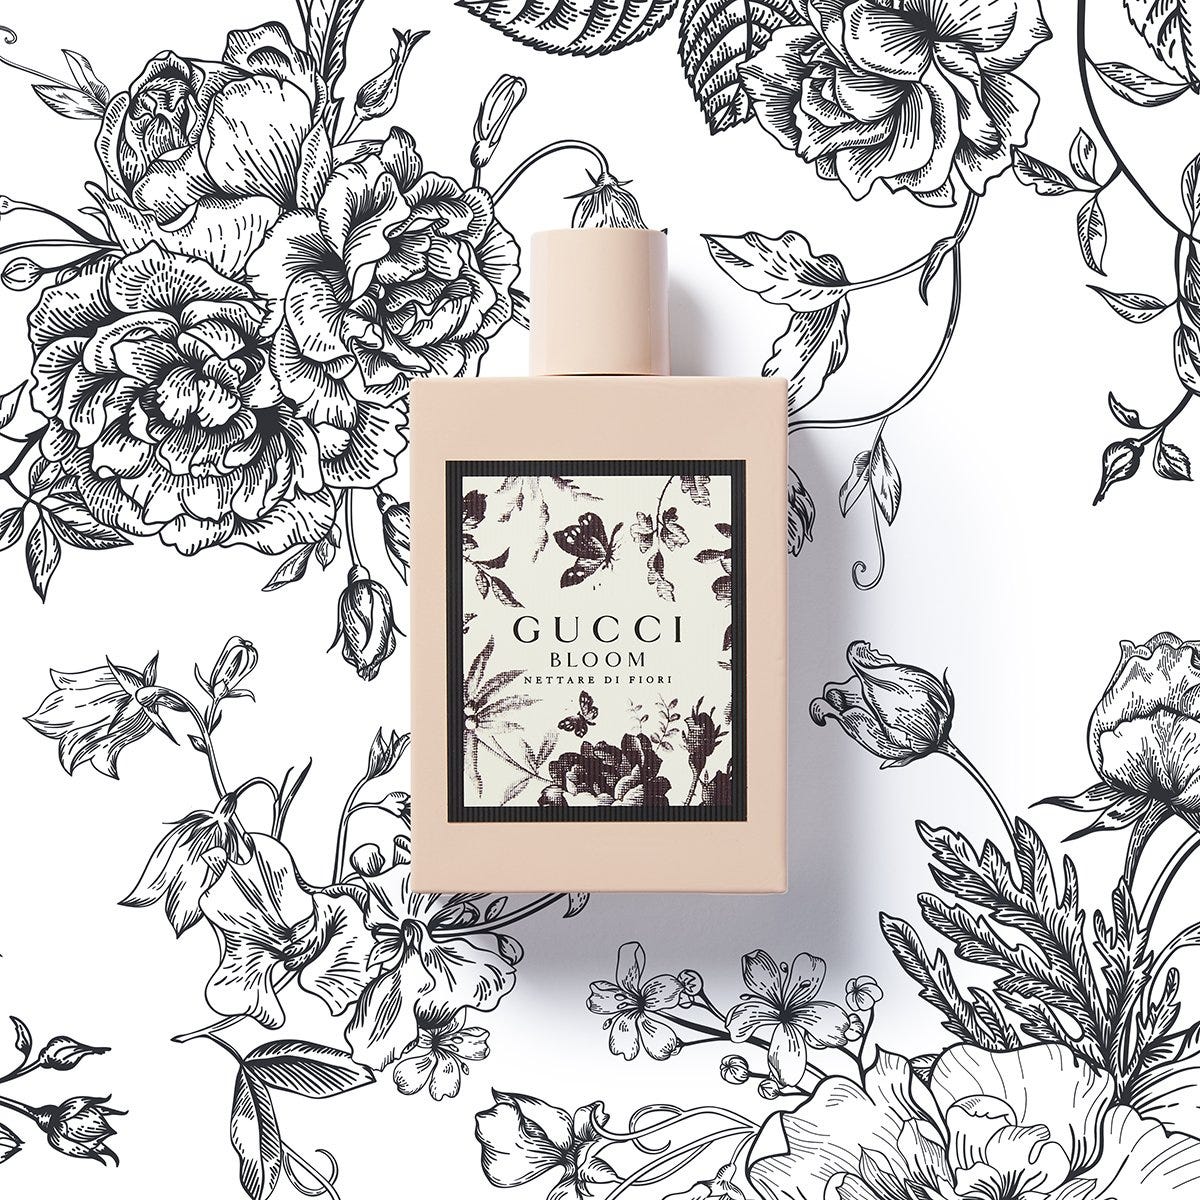 Gucci Bloom Nettare di fiori eau de Parfum Intense 100ml - David jones -  Medium